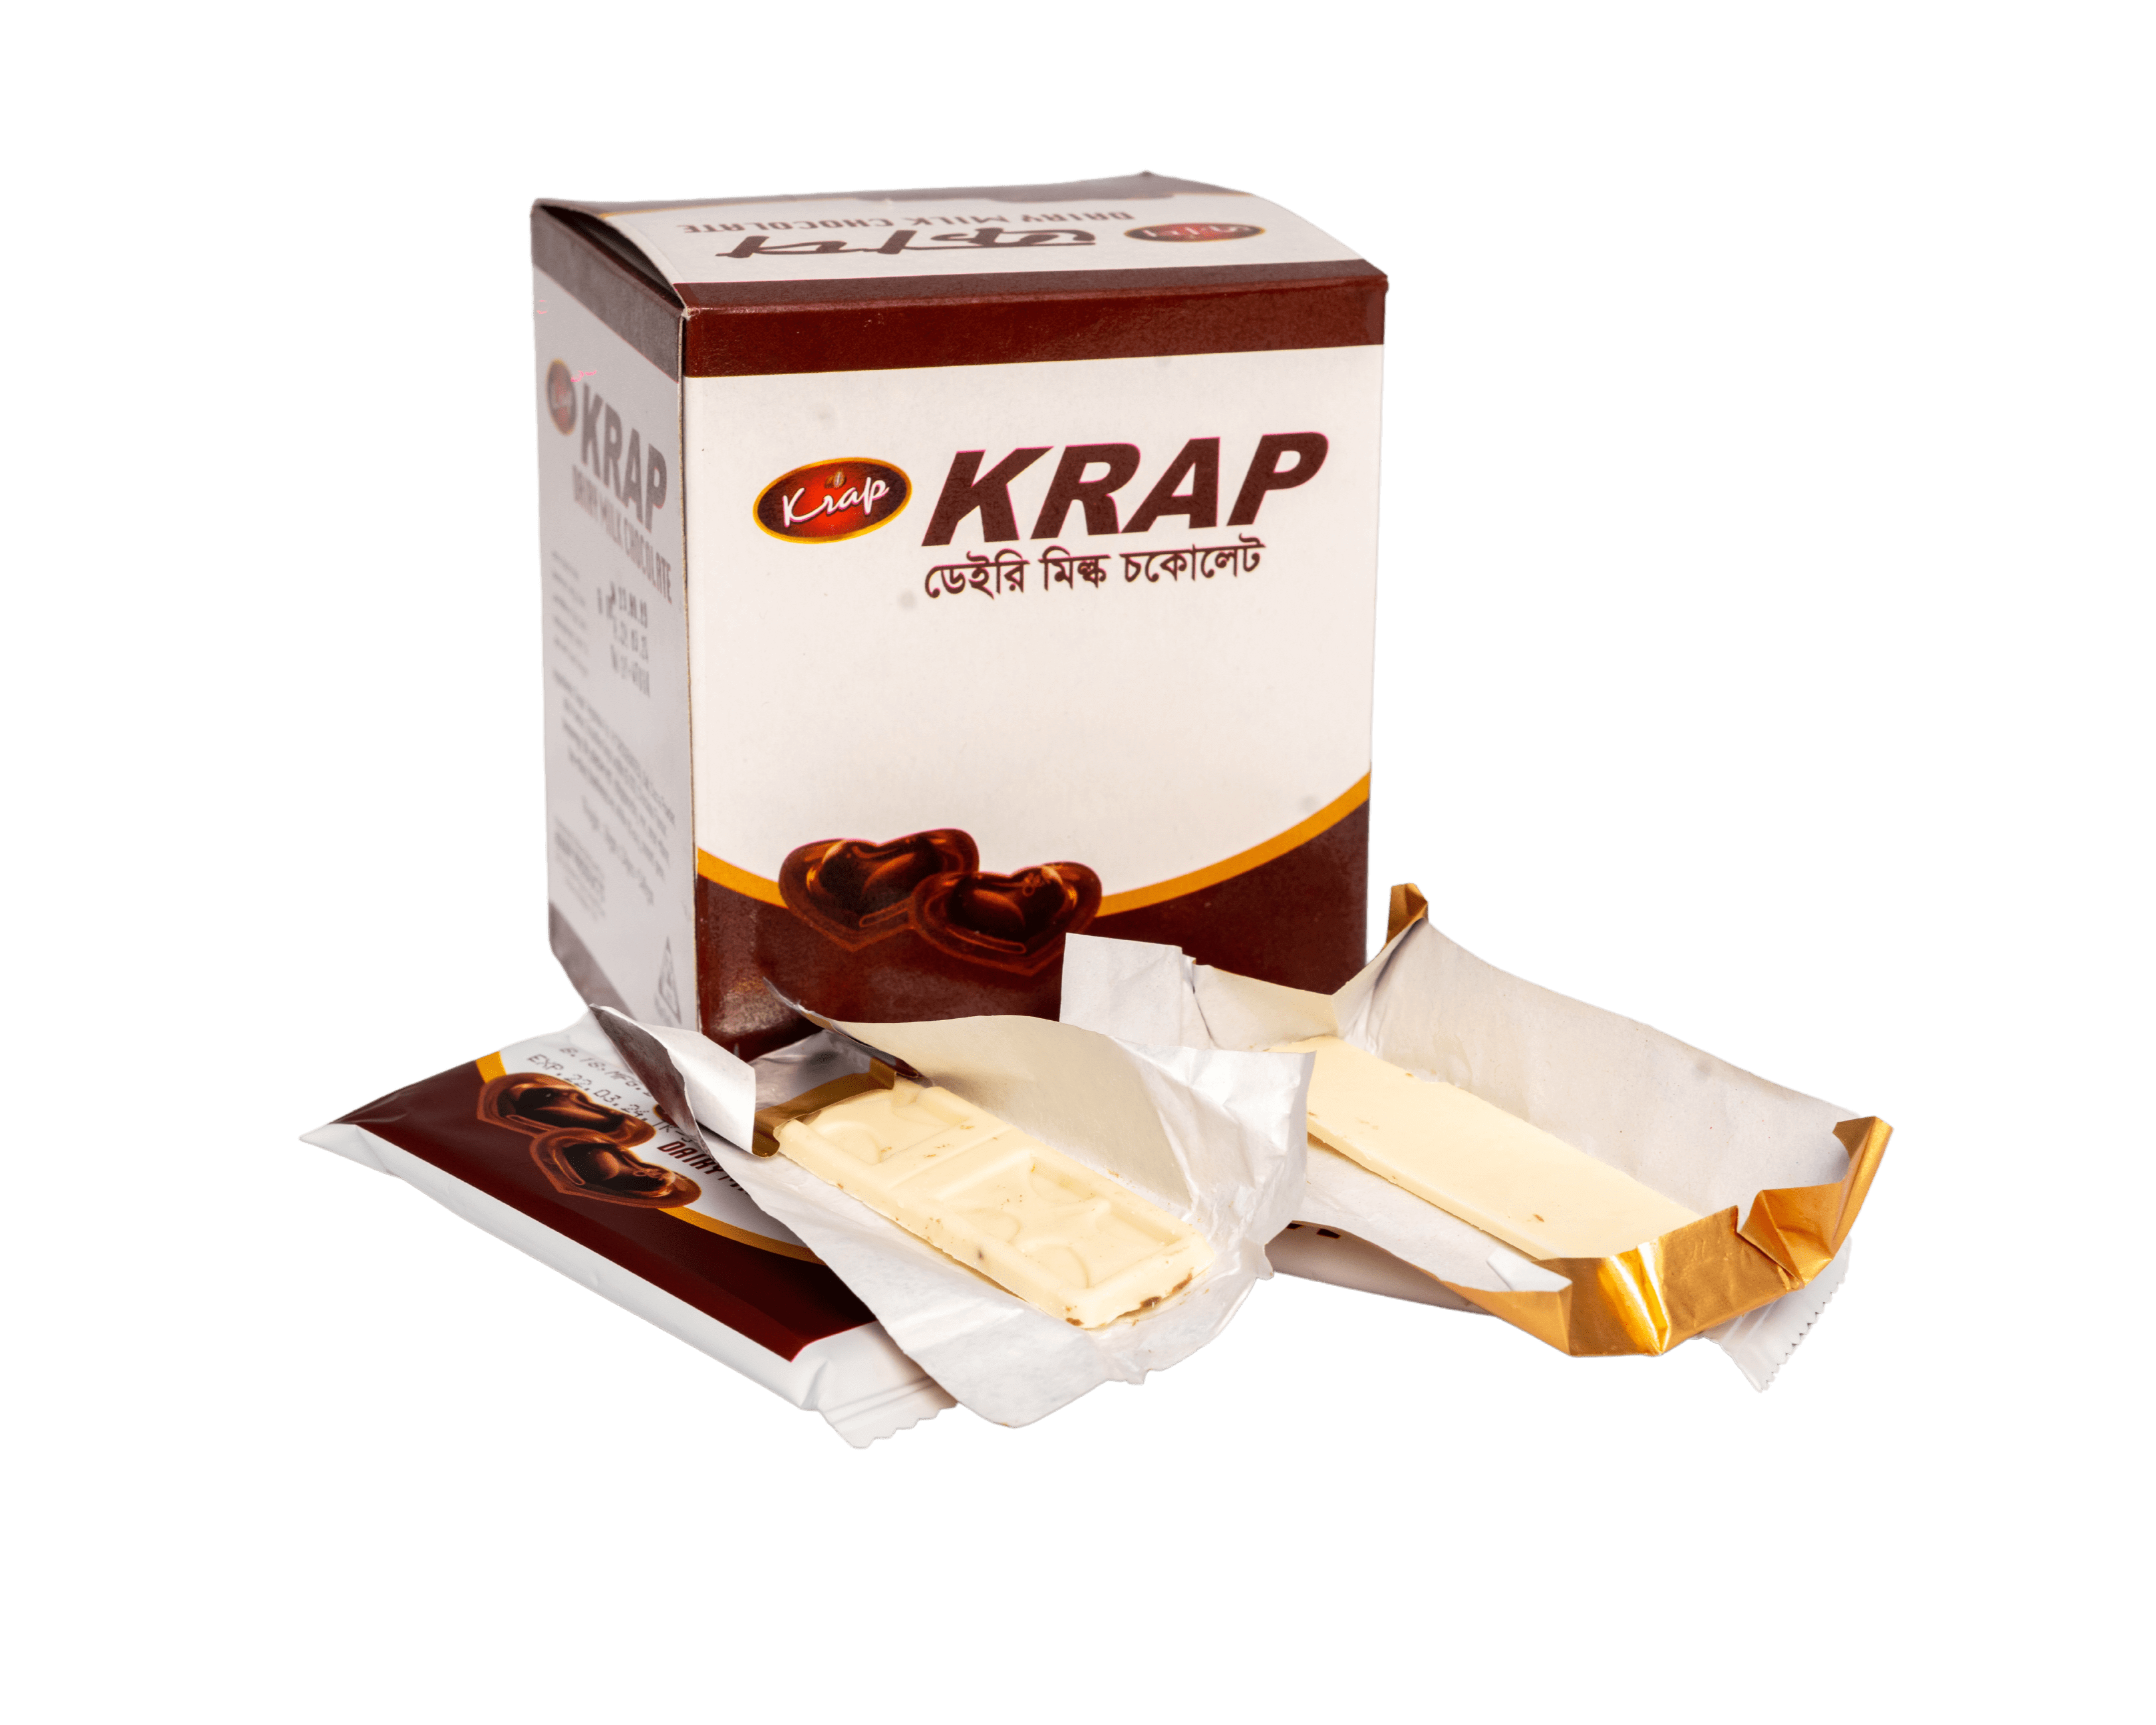 Krap Dairy Milk Chocolate - White Chocolate